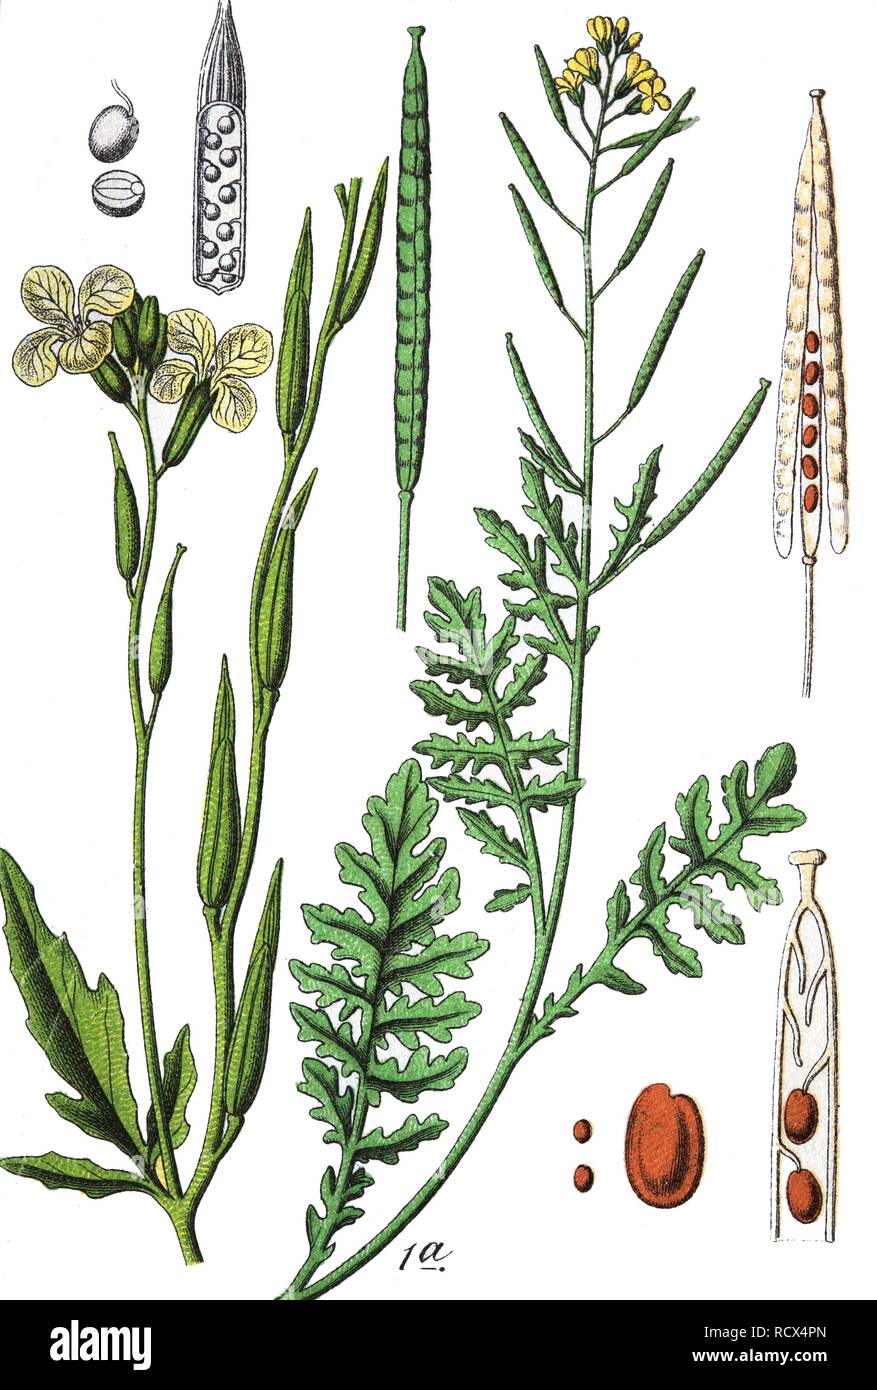 Common dogmustard (Erucastrum gallicum) and rocketsalad (Eruca vesicaria) on the right, medicinal and useful plants Stock Photo